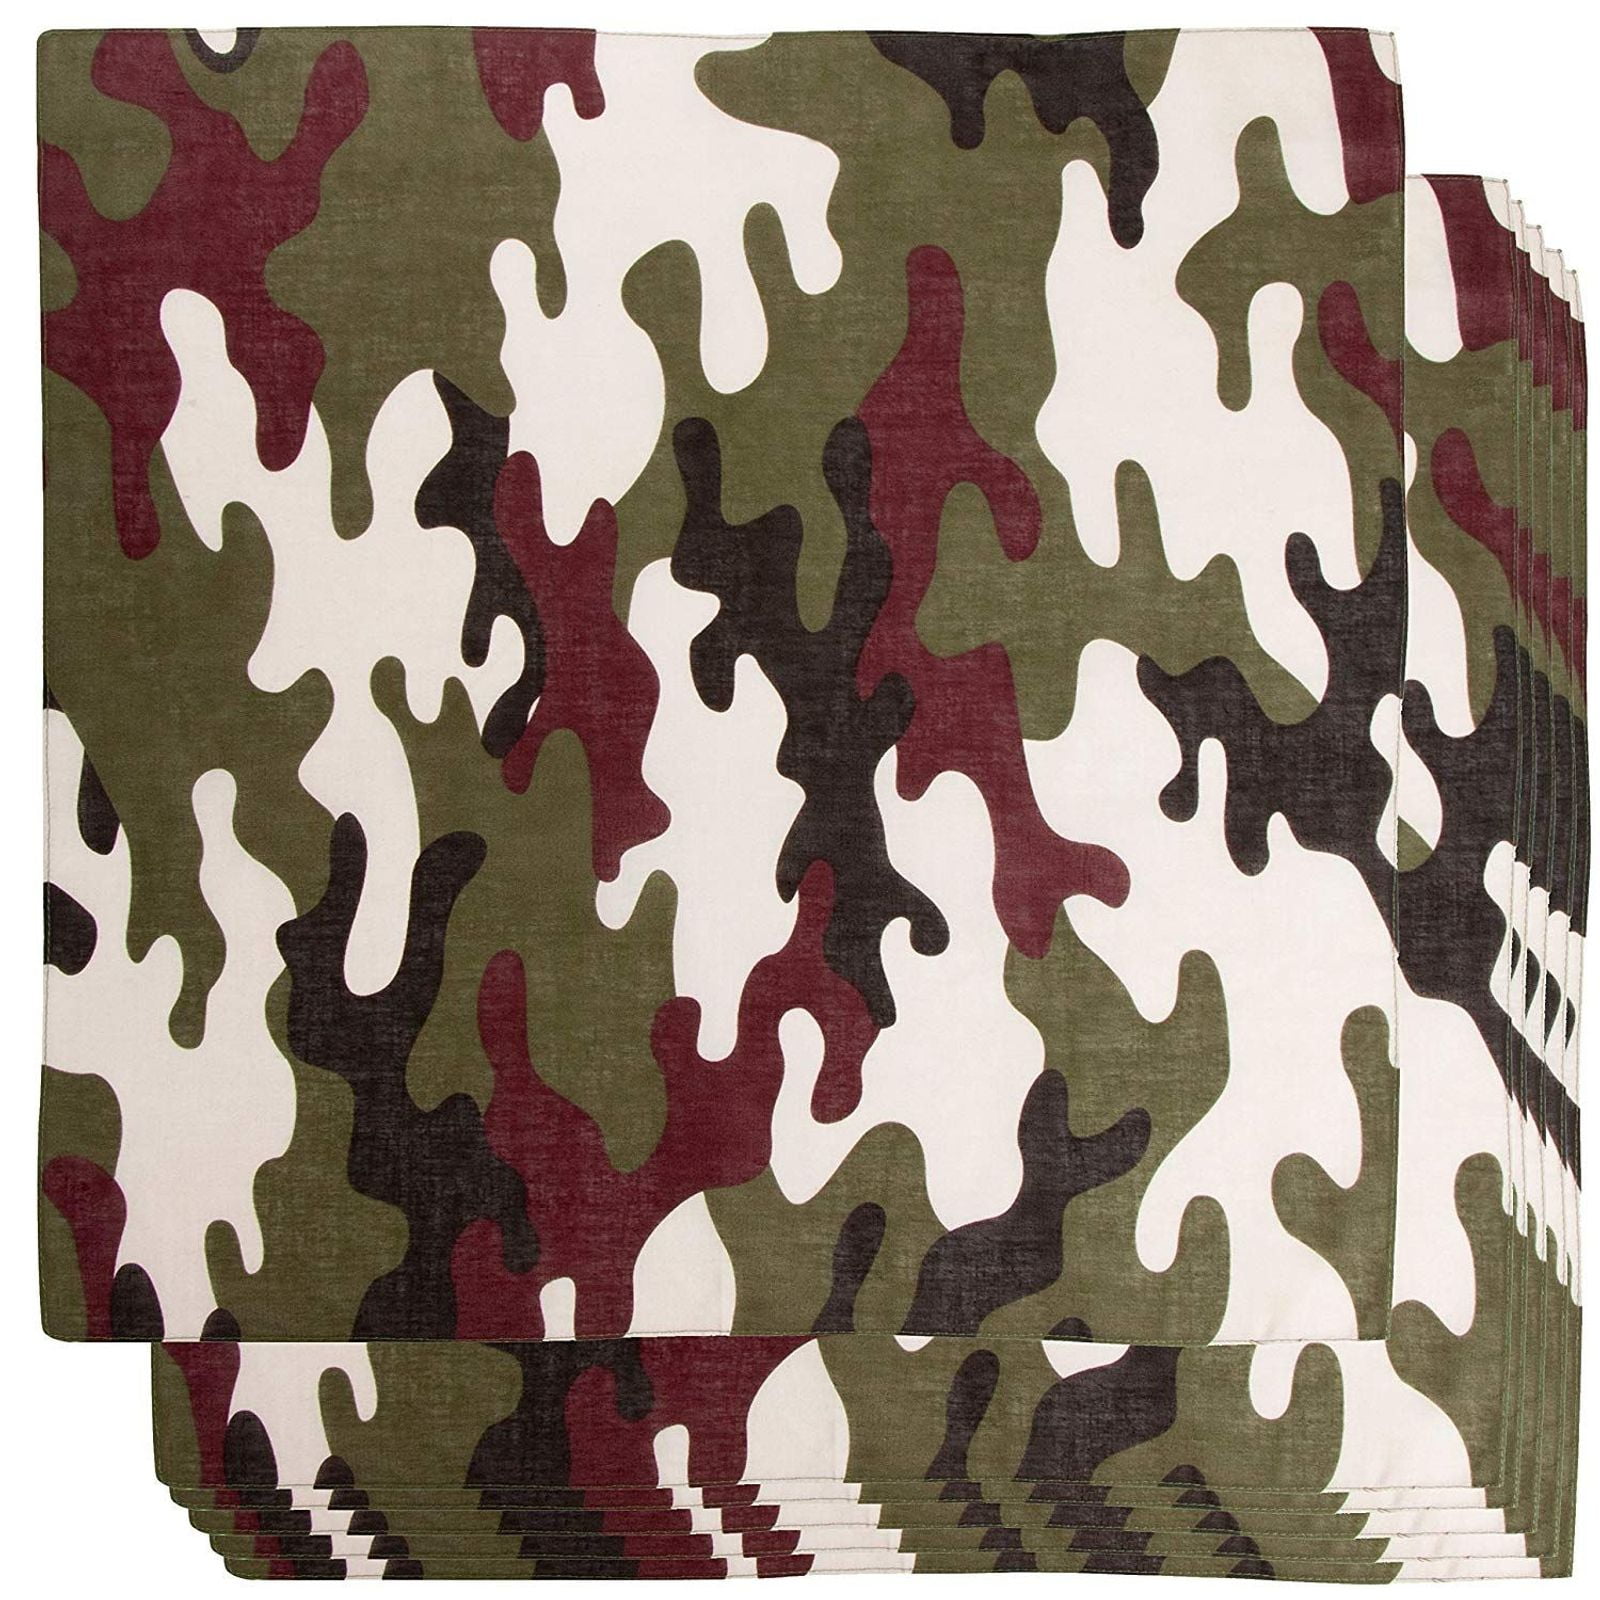 100% Camouflage Military Neckerchief Scarf Army New Urban Camo Cotton Bandana